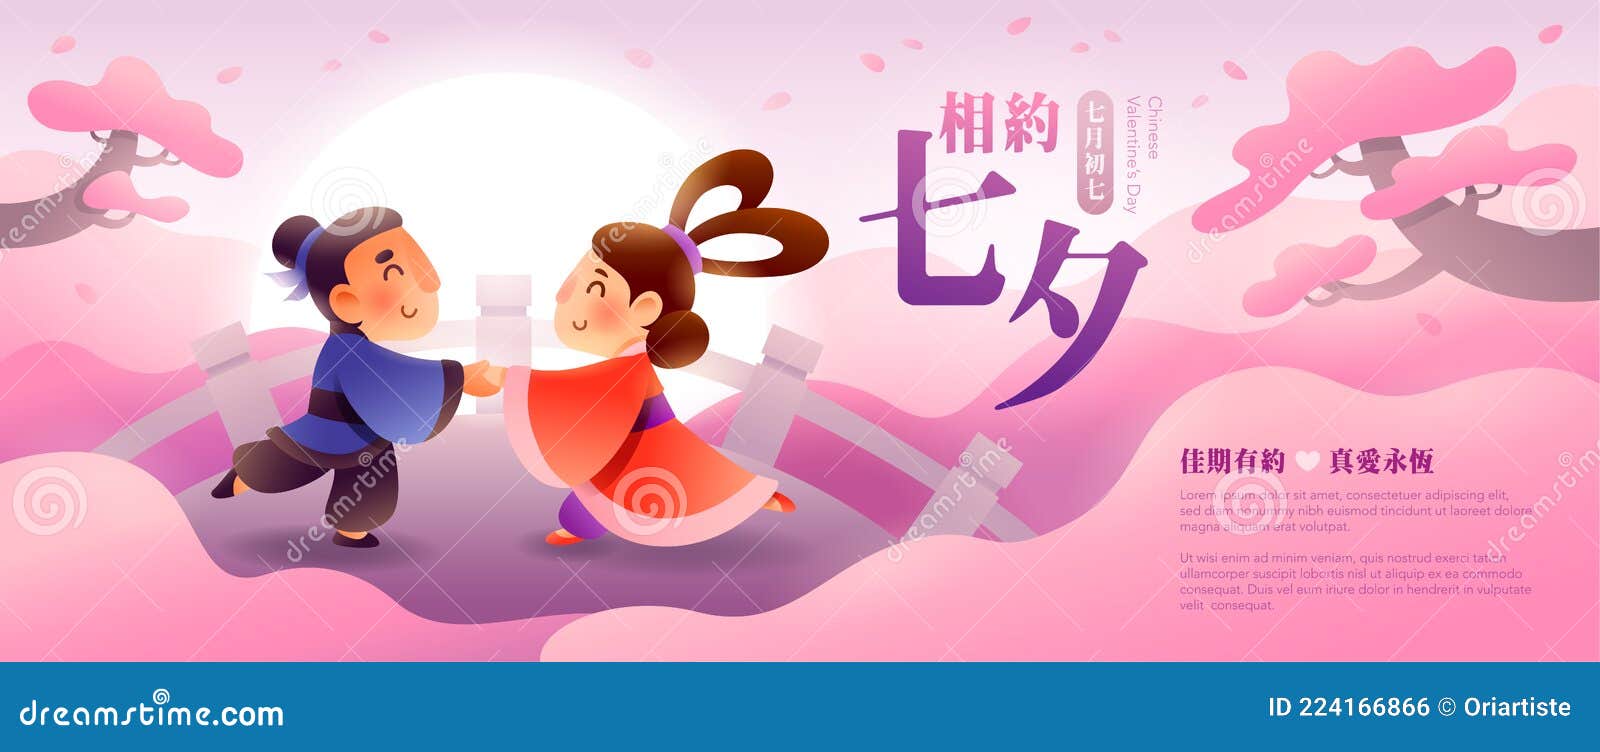 chinese valentineÃ¢â¬â¢s day. qixi festival. celebrates the annual meeting of the cowherd and weaver girl on seventh day of the 7th